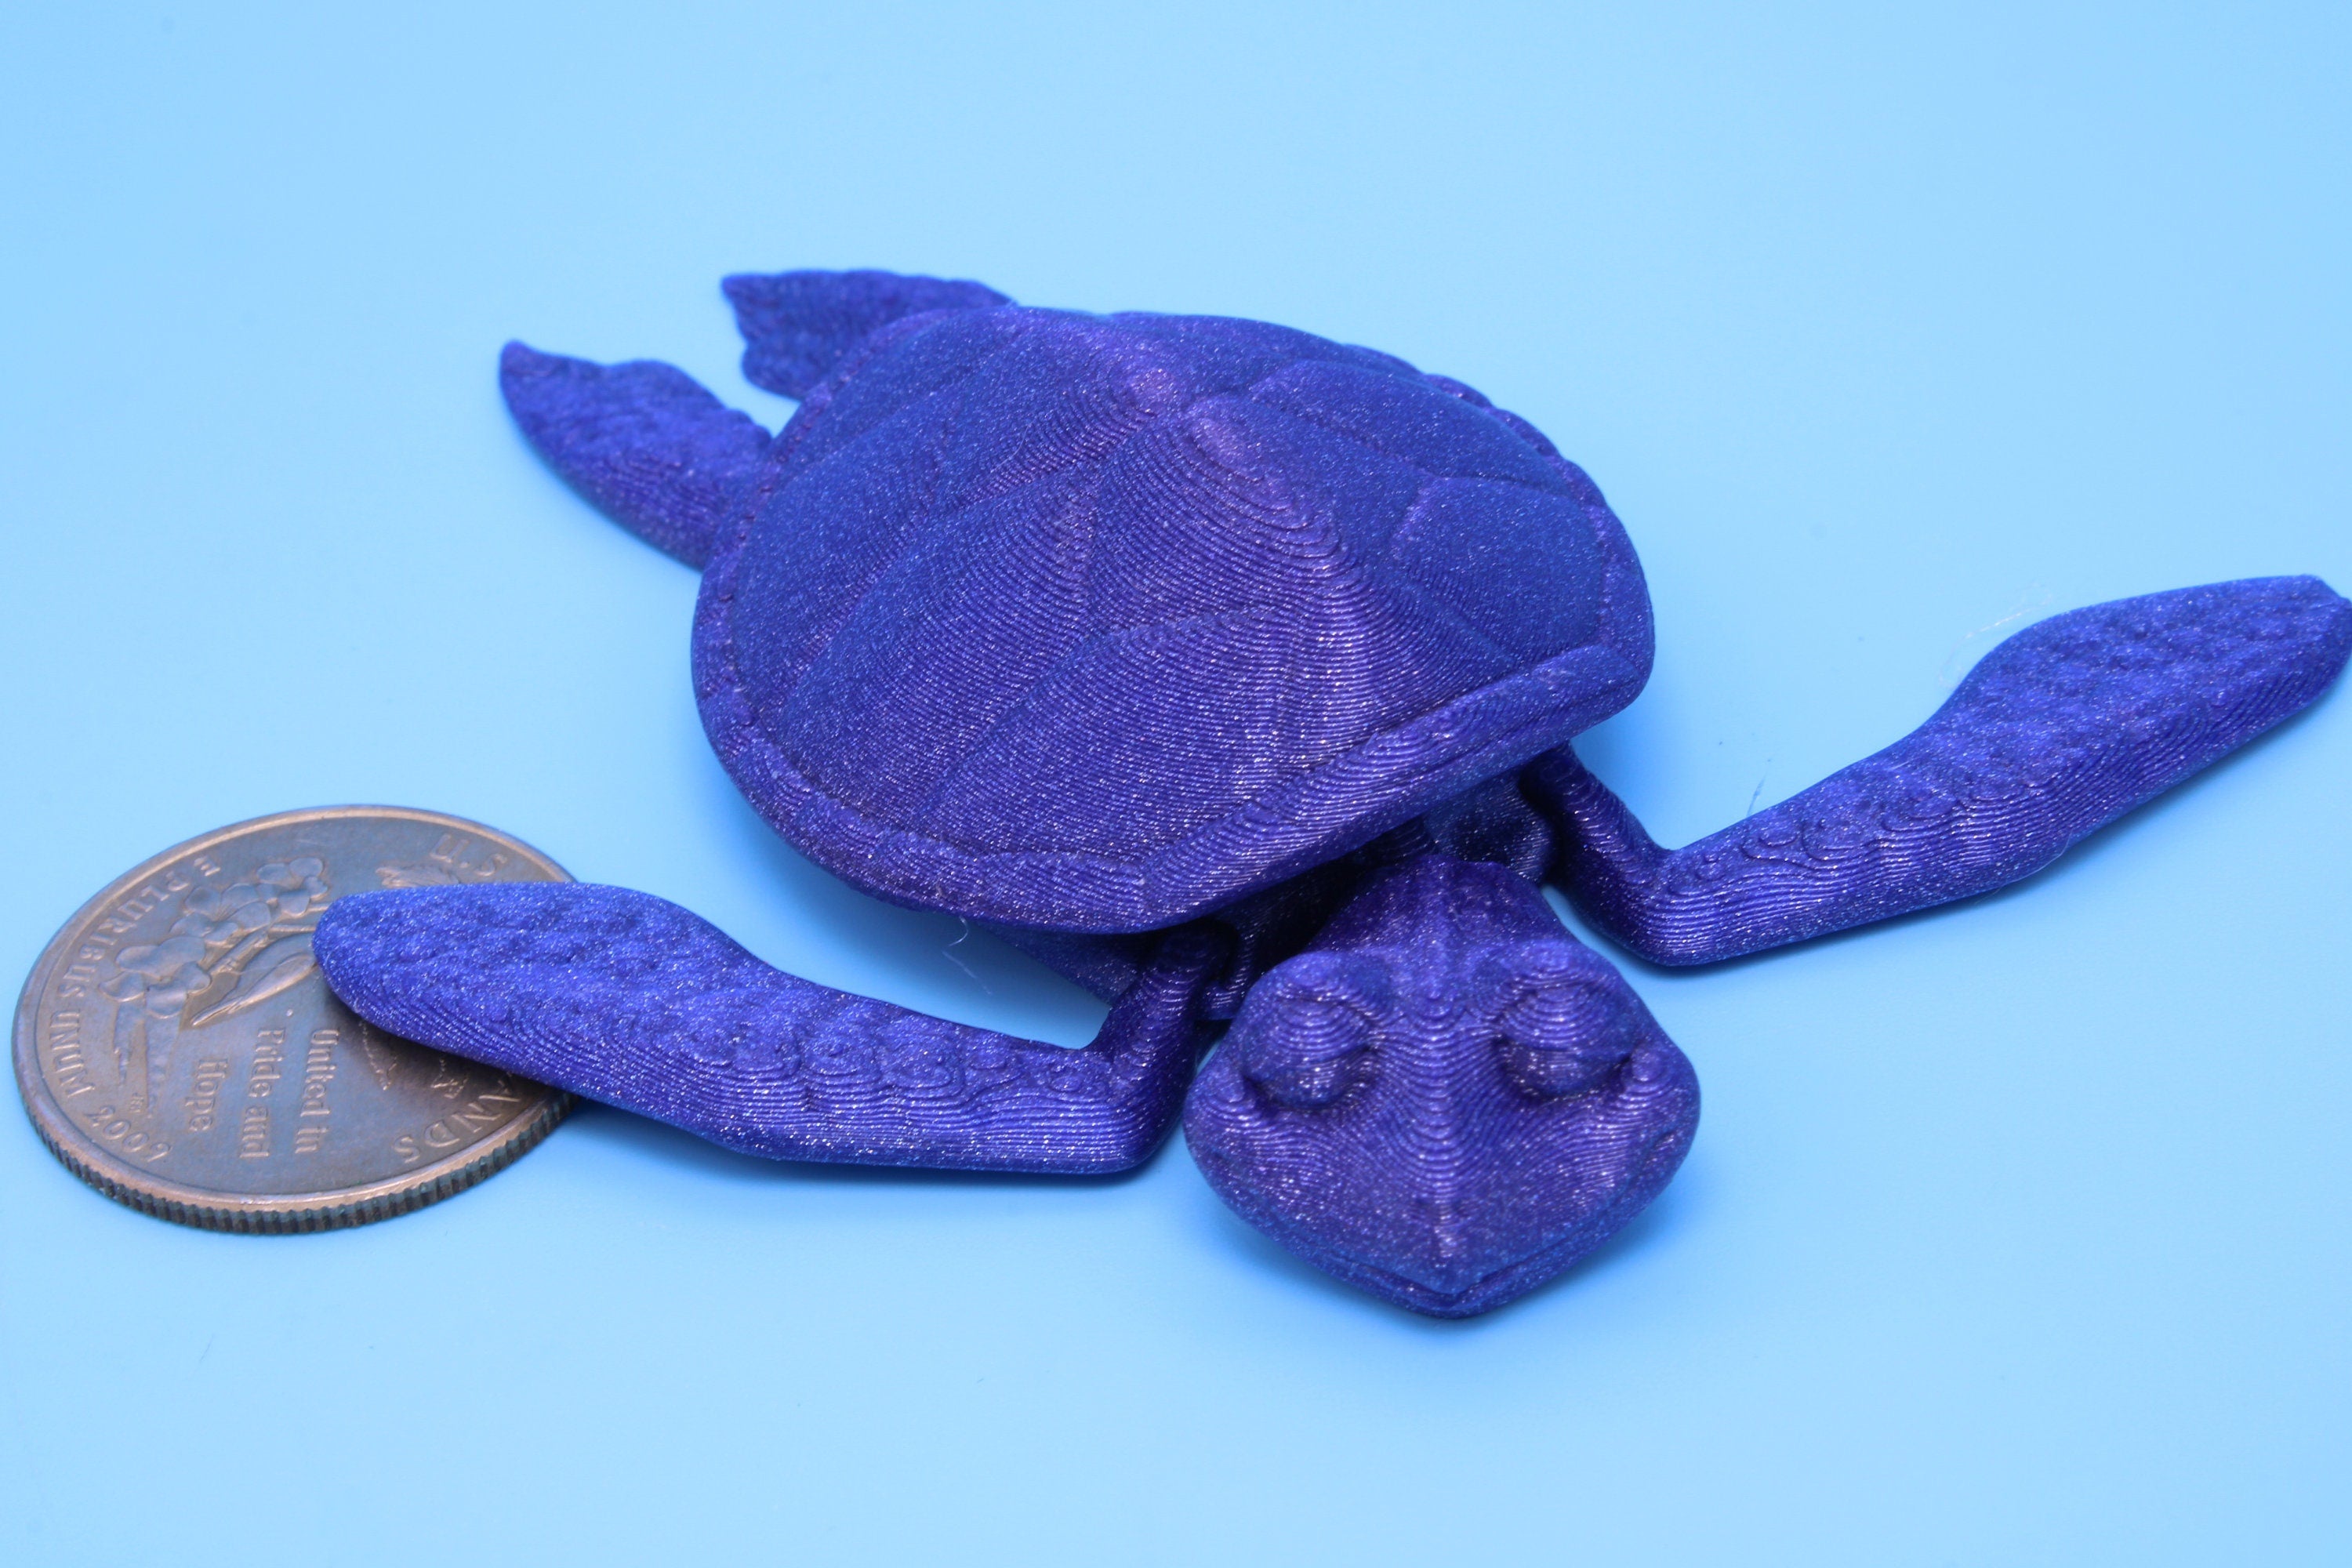 Turtle- Miniature, Articulating, 3D printed